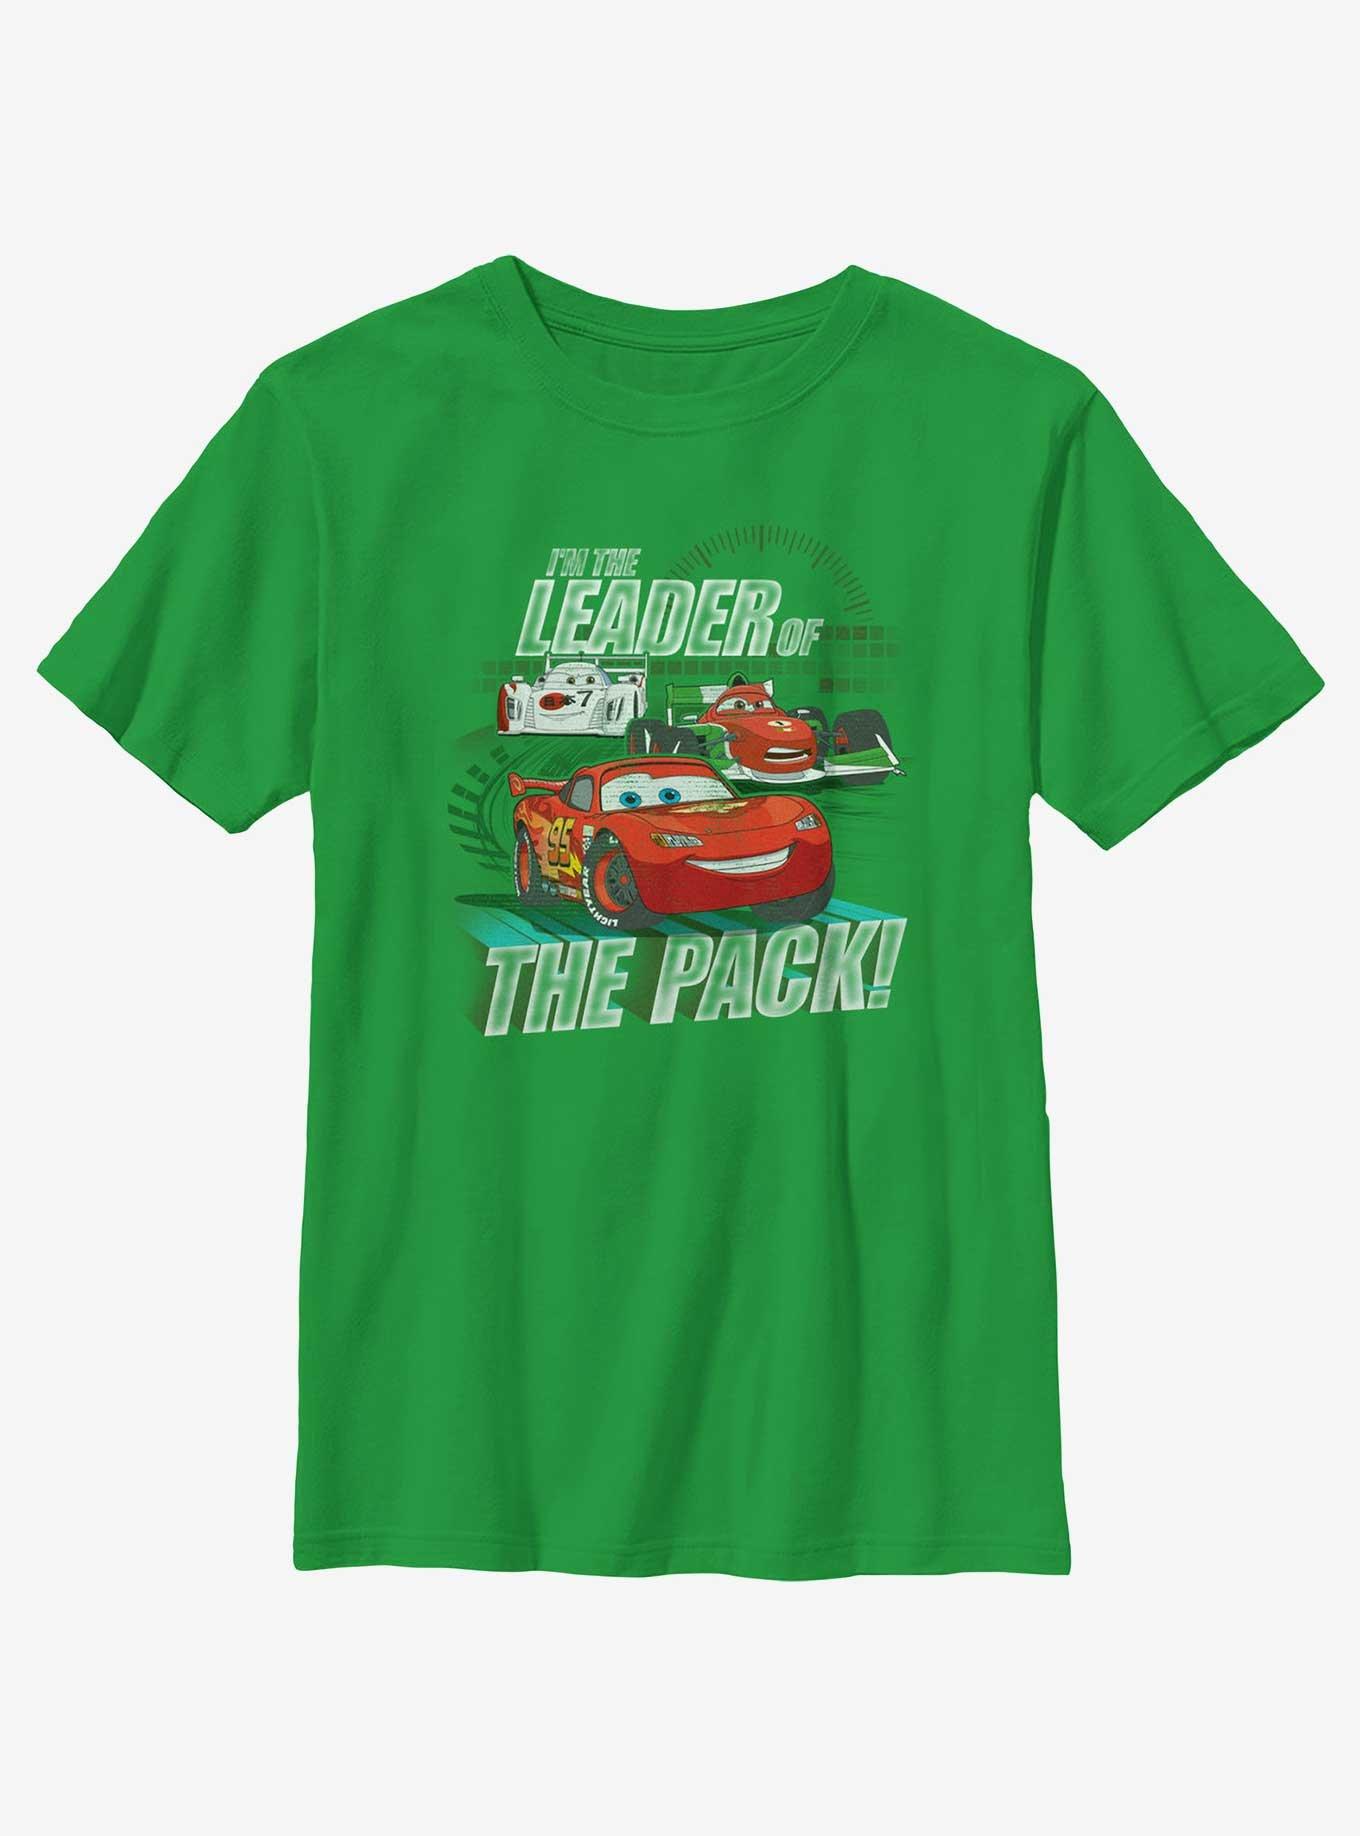 Disney Pixar Cars Leader Of The Pack Youth T-Shirt, KELLY, hi-res